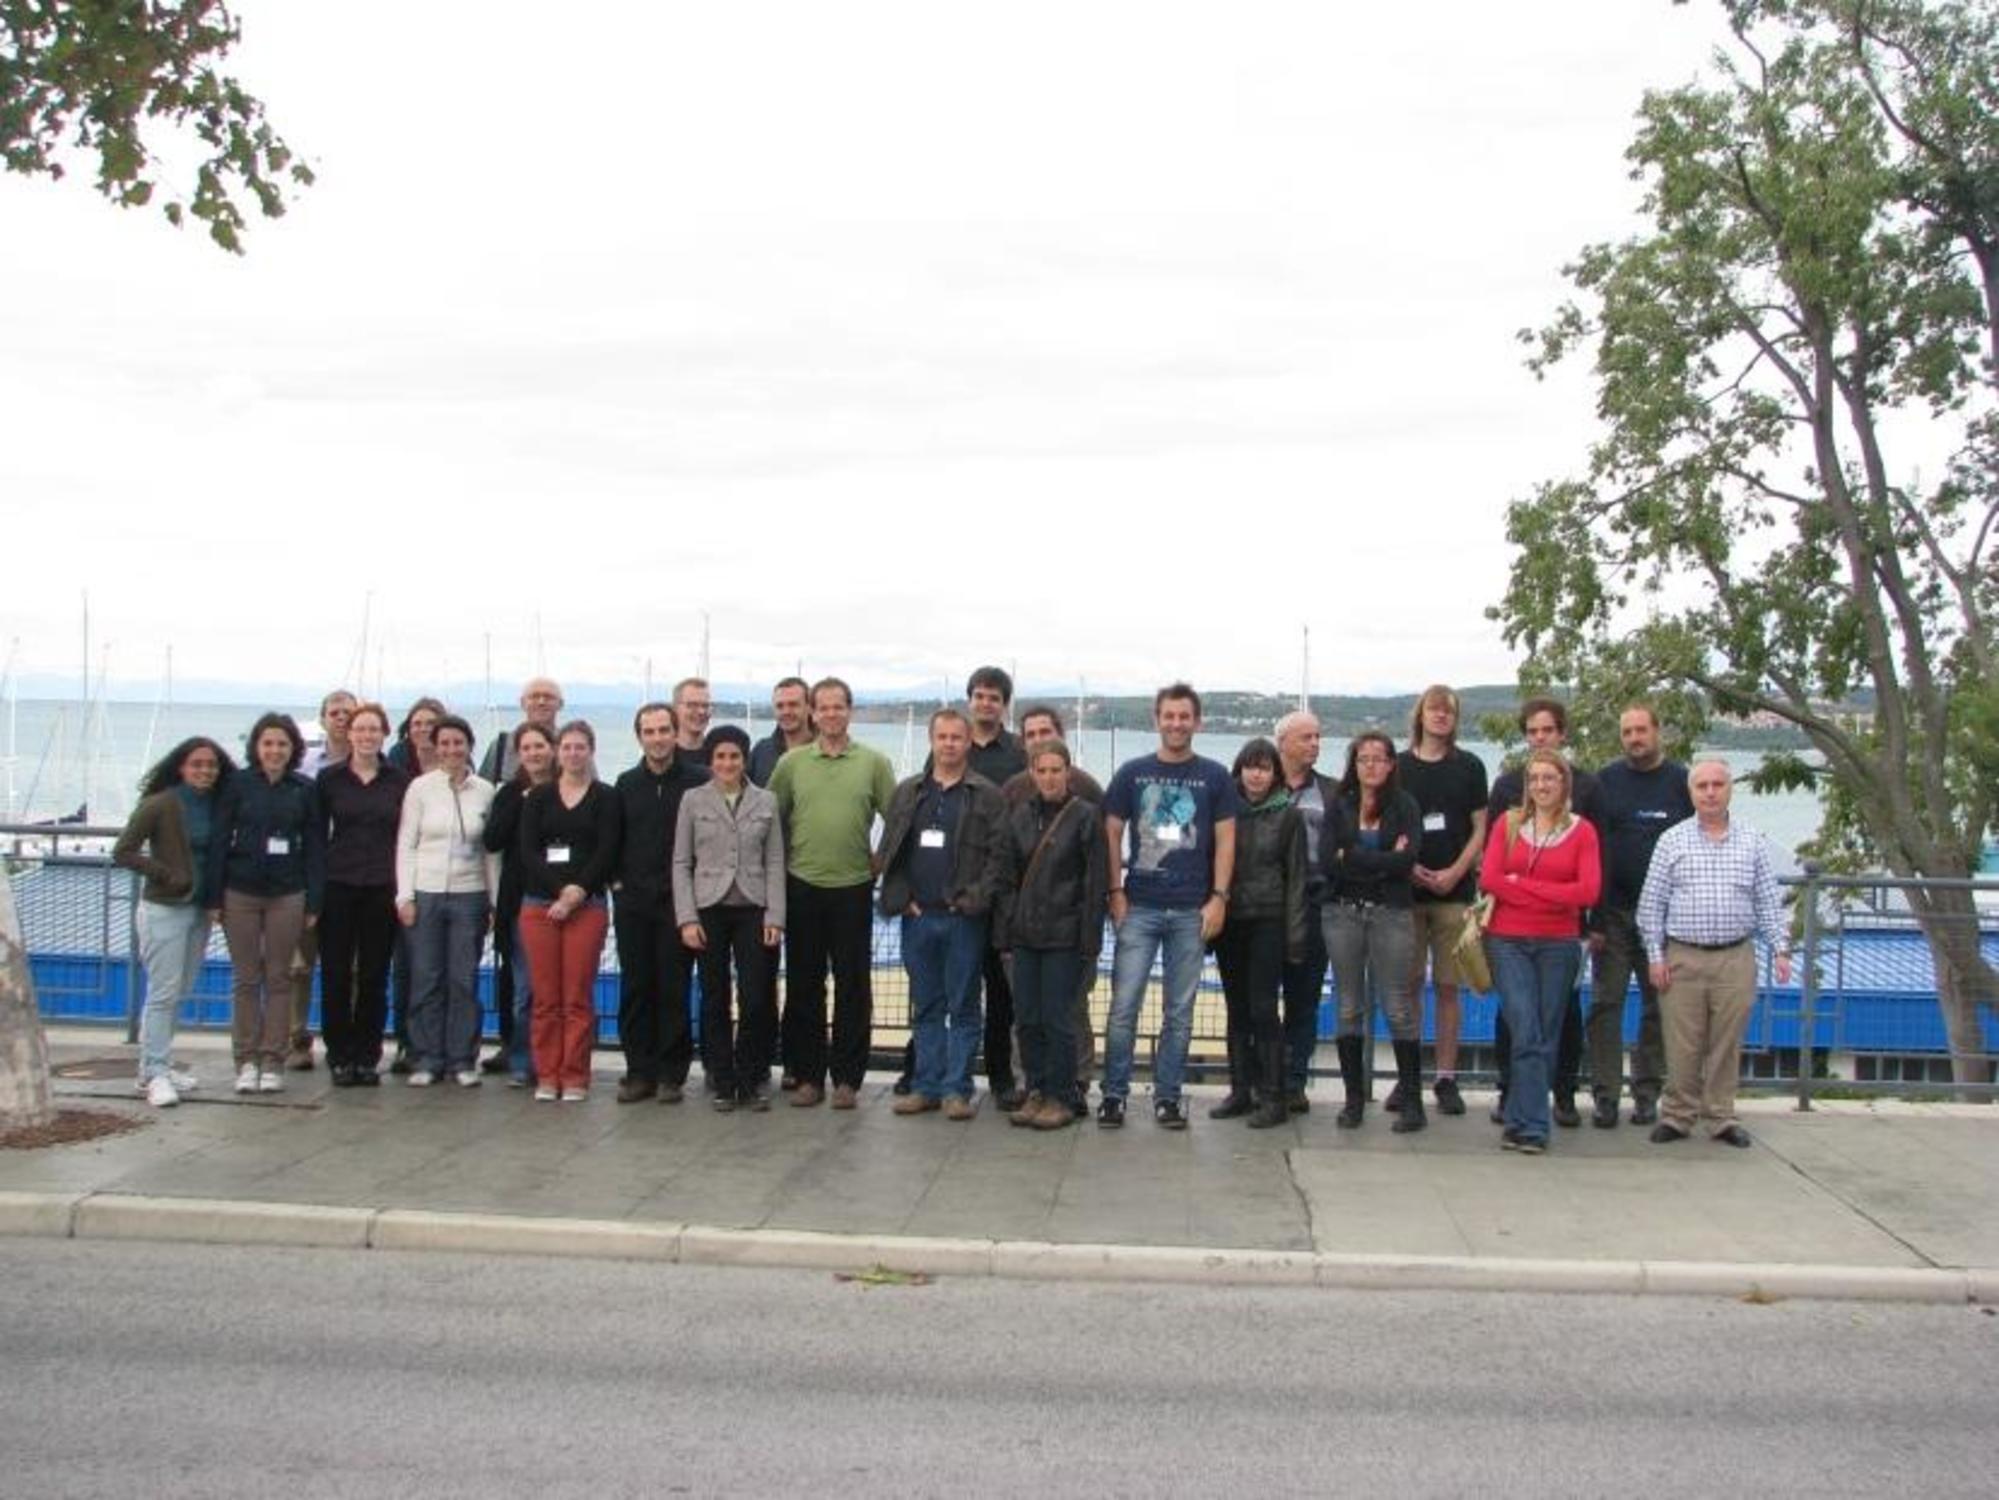 Group photo of the participants of the International Scientific Workshop on Combinatorial Algorithms in Bioinformatics, taken in Koper